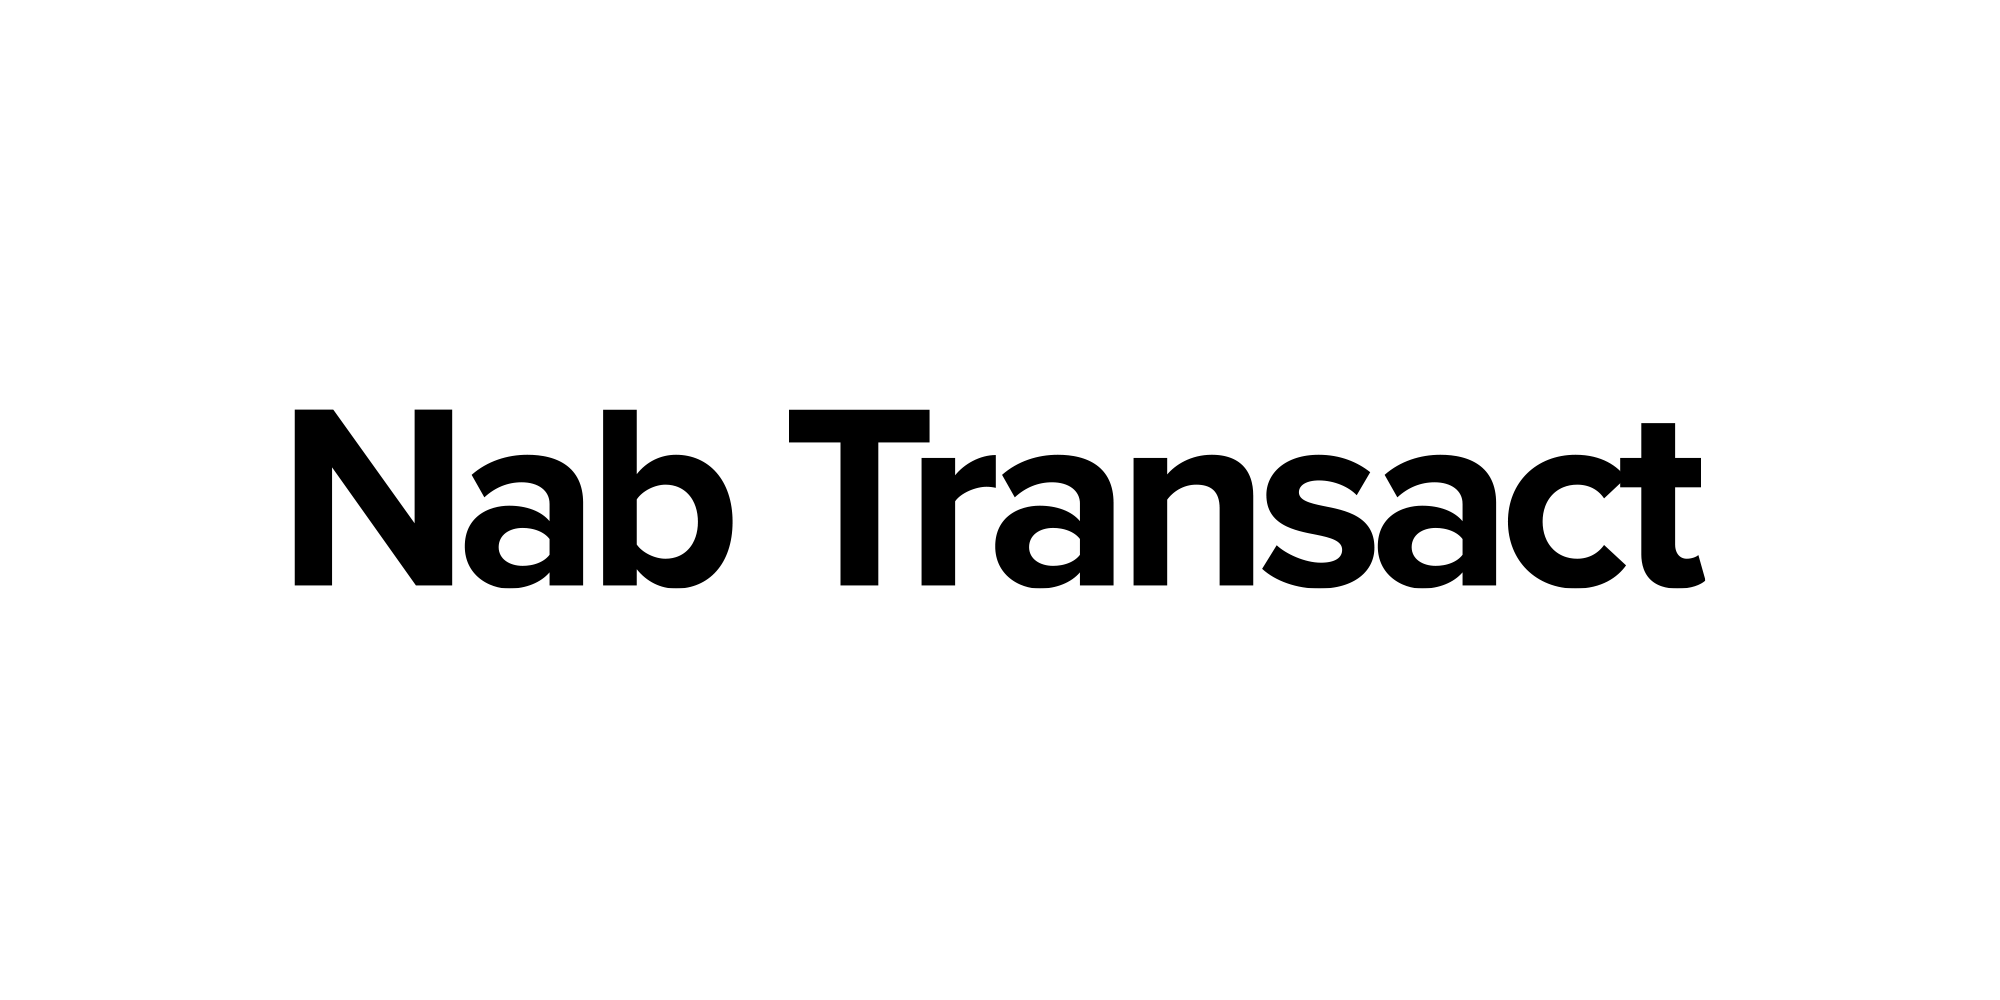 Nab Transact logo